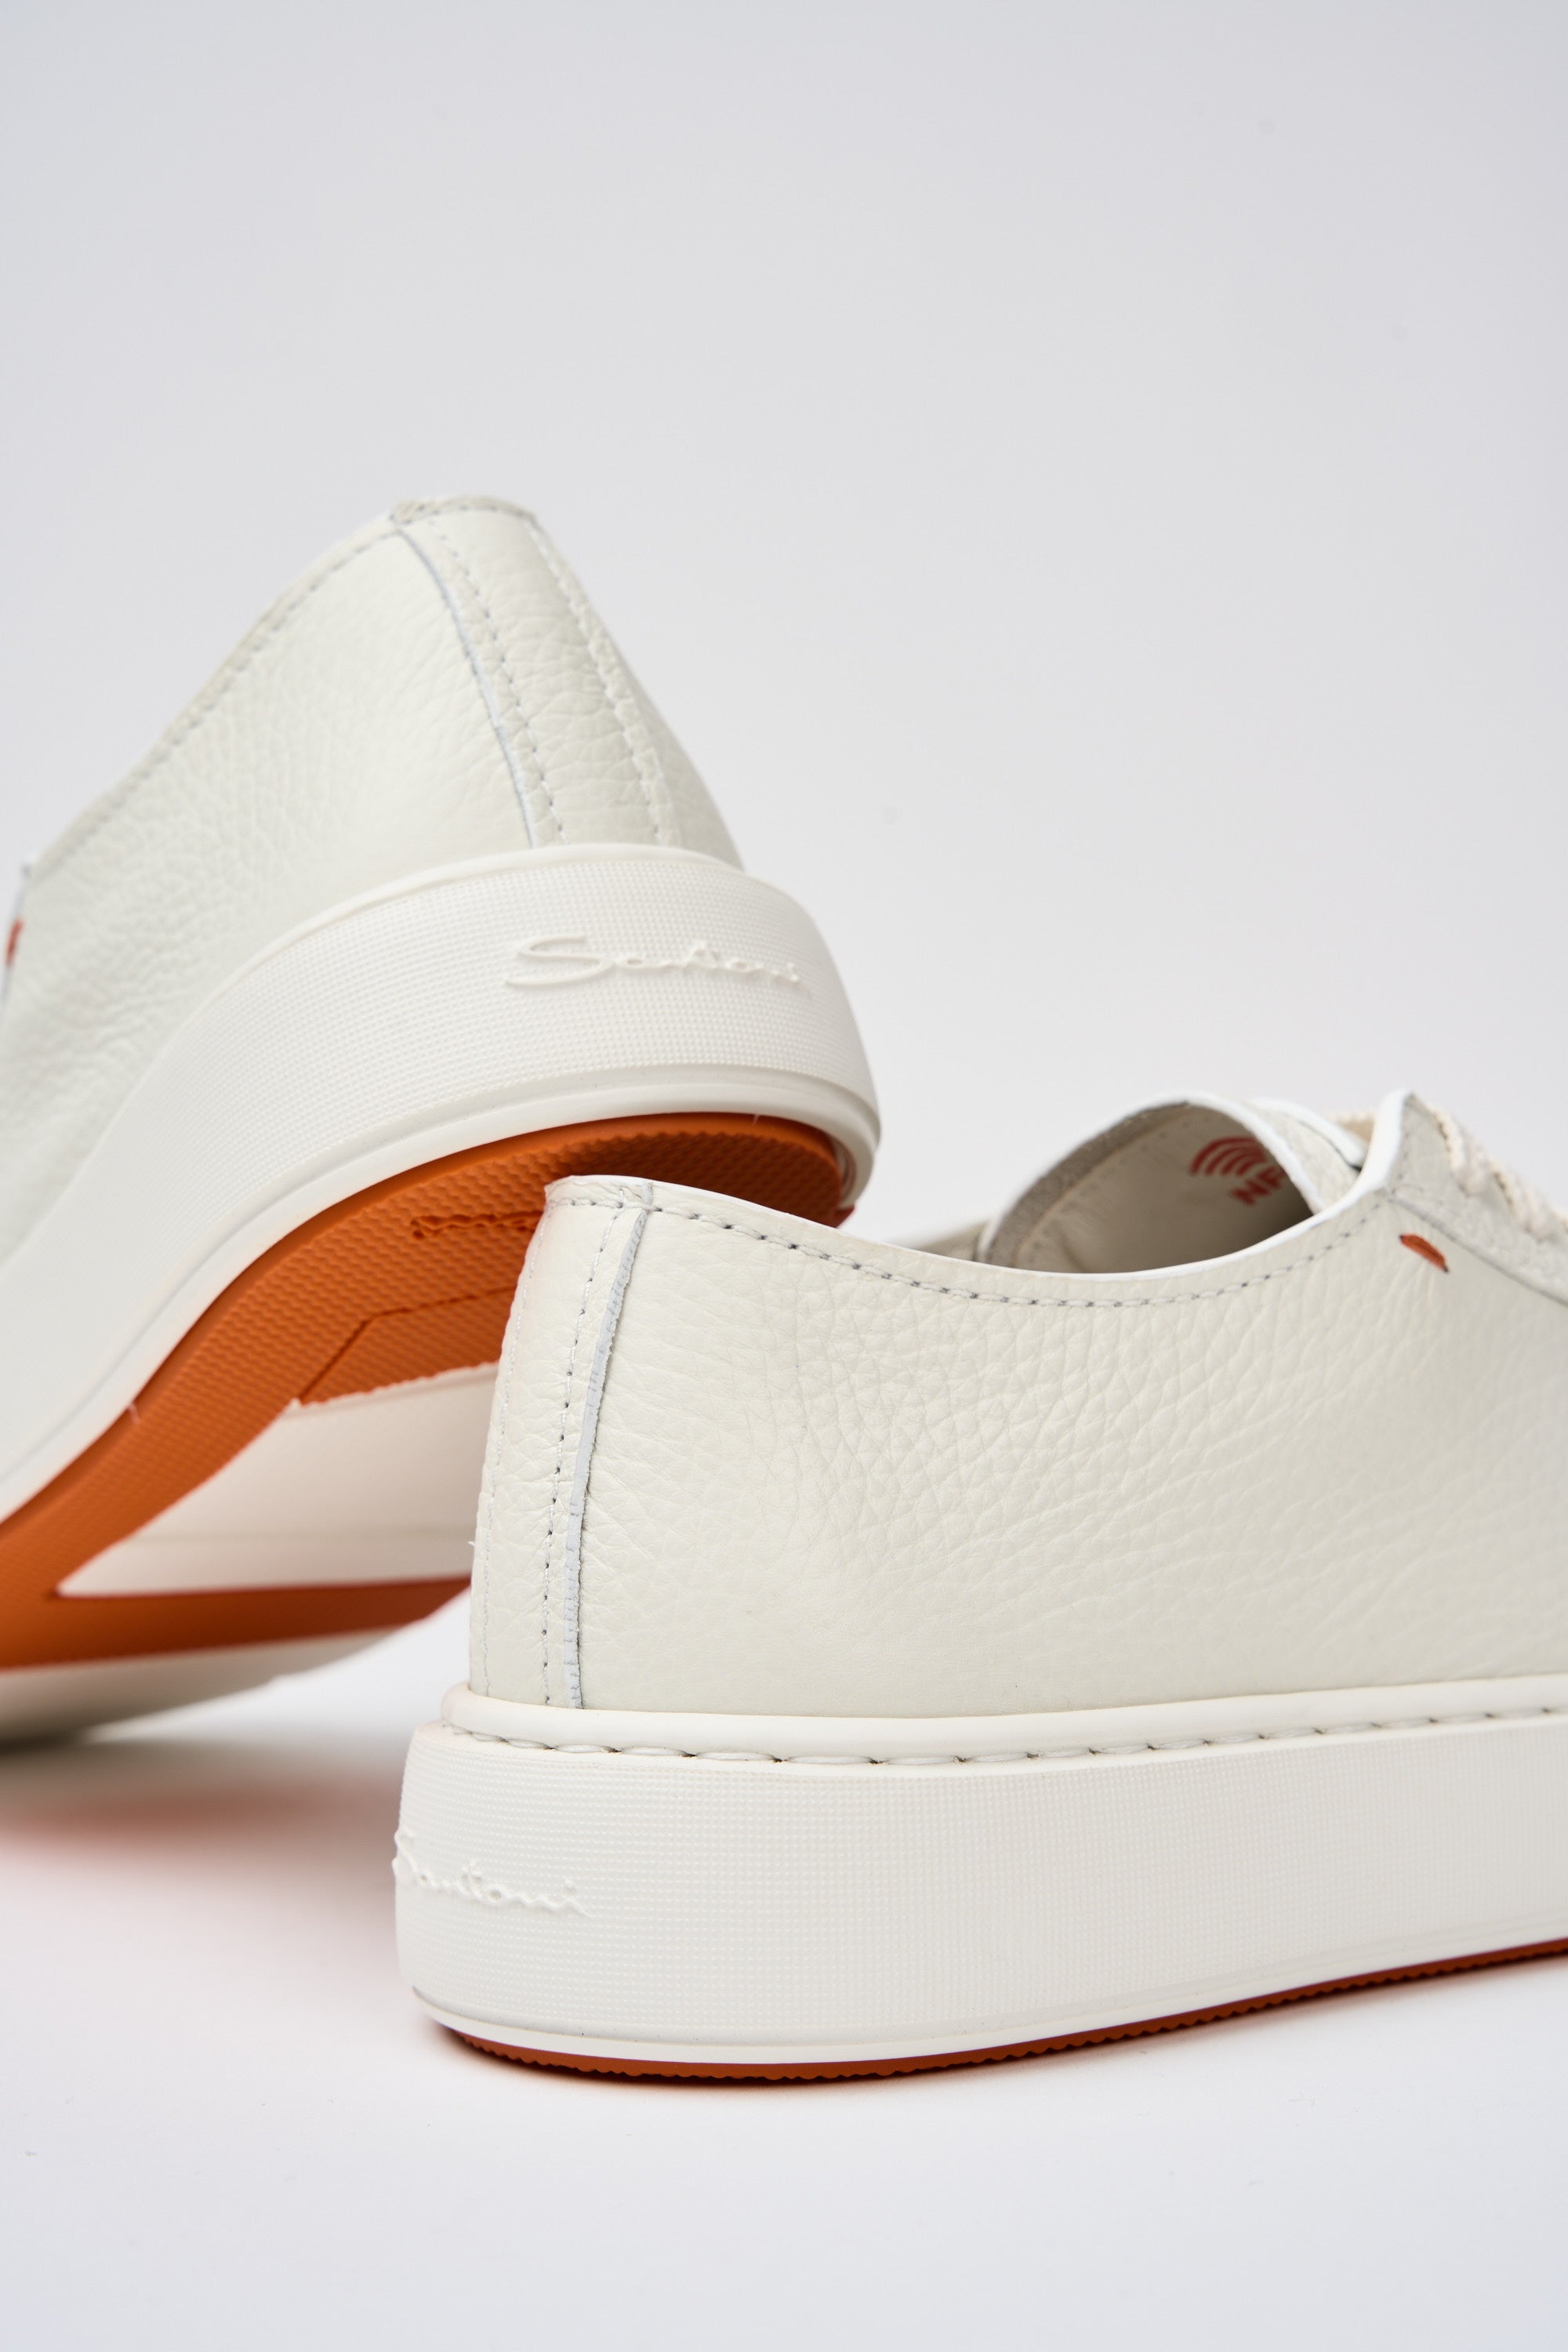 Santoni Leather Tumbled Sneakers White-5